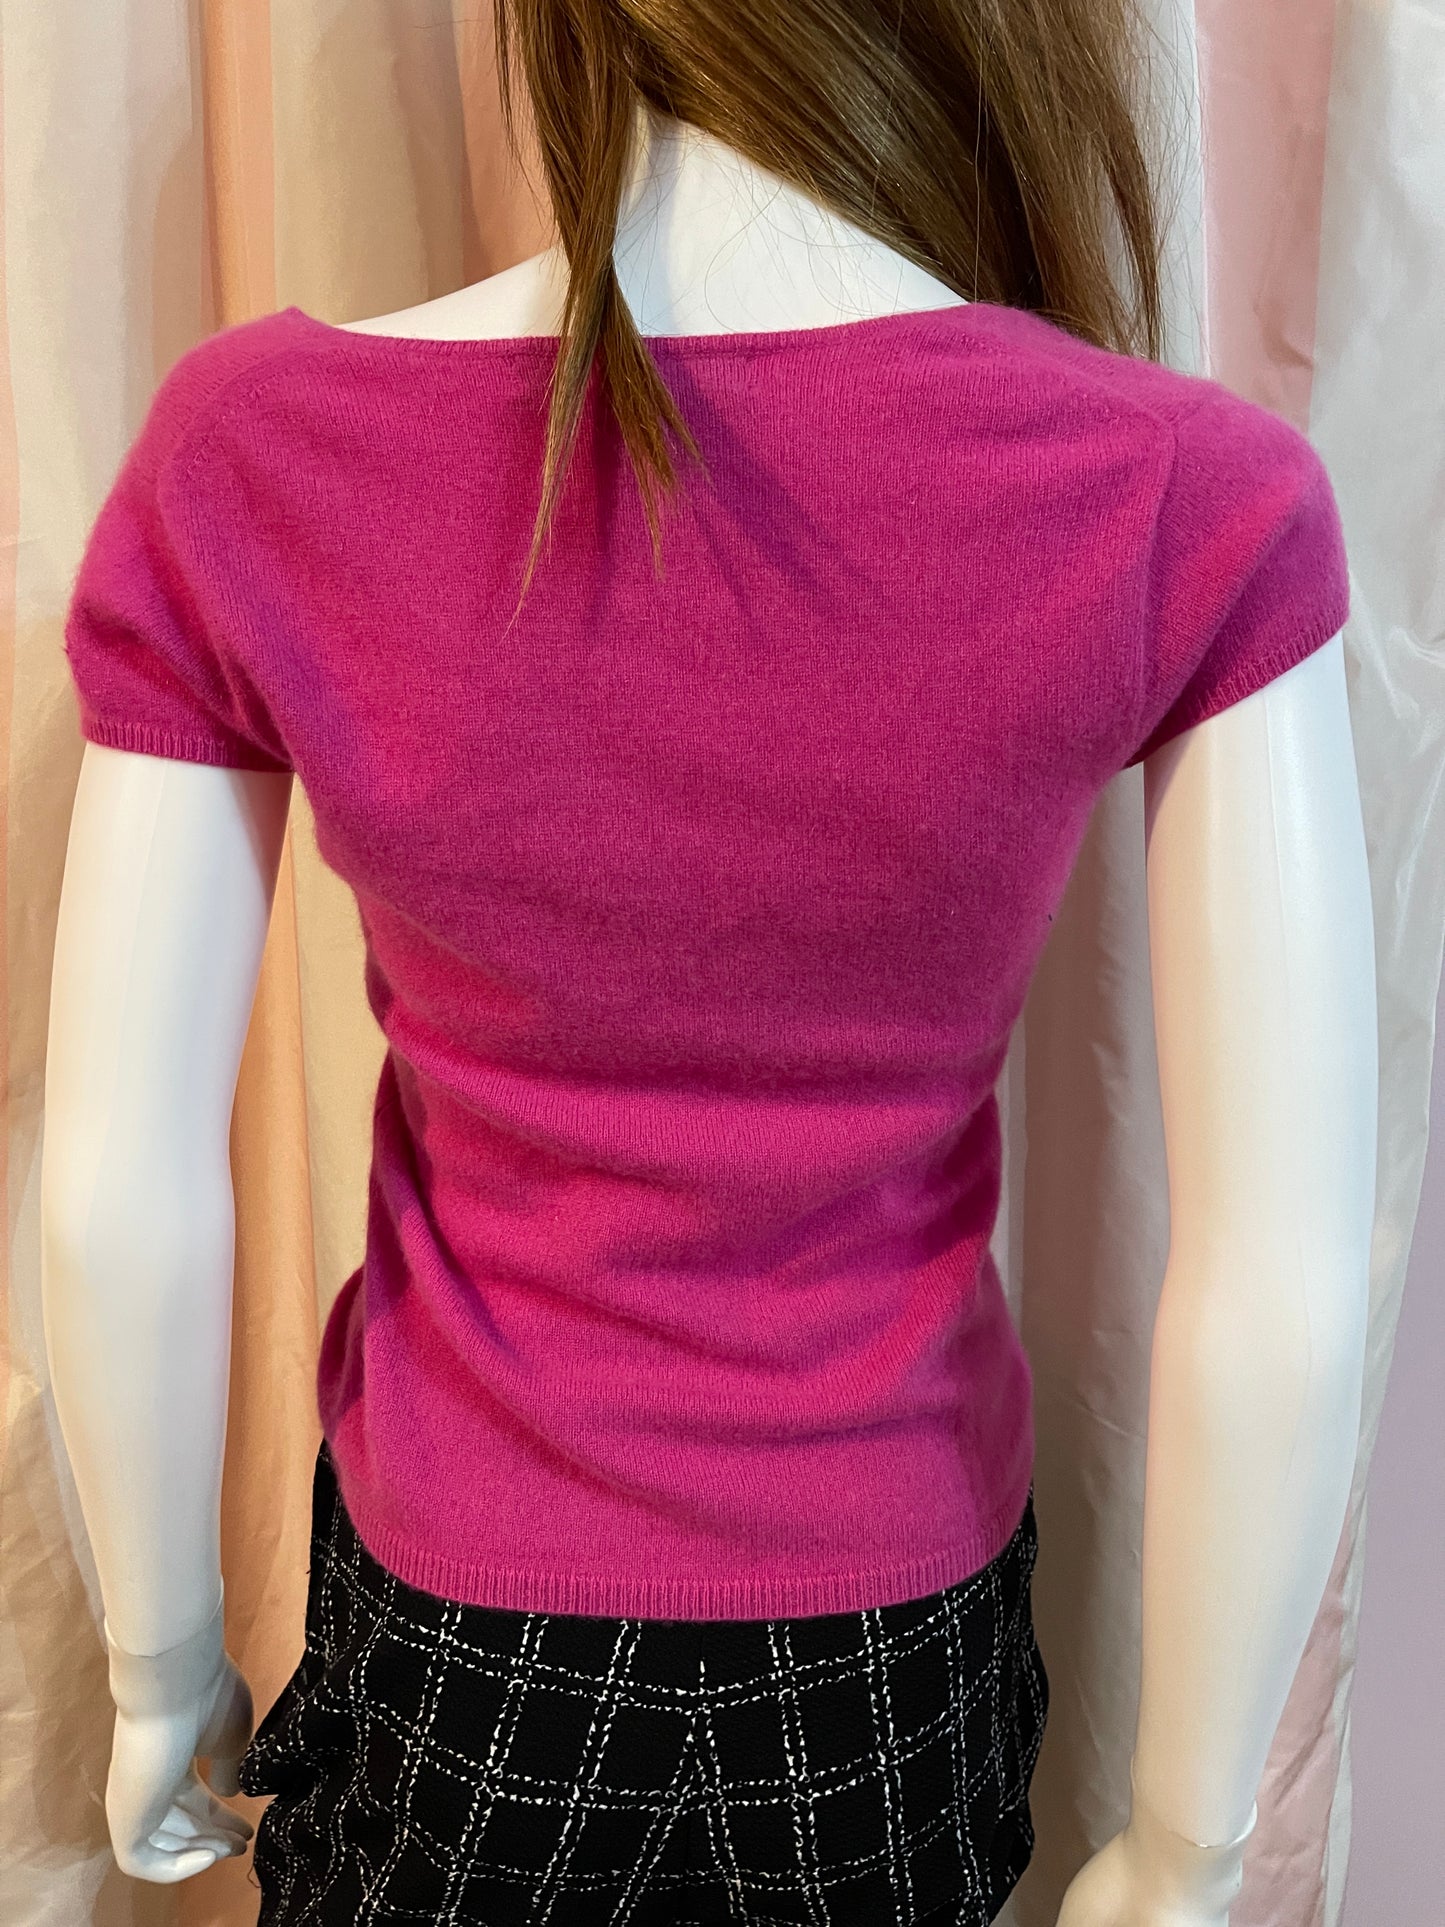 Hot Pink Fuschia Cashmere 100% Sweater & Black Pants